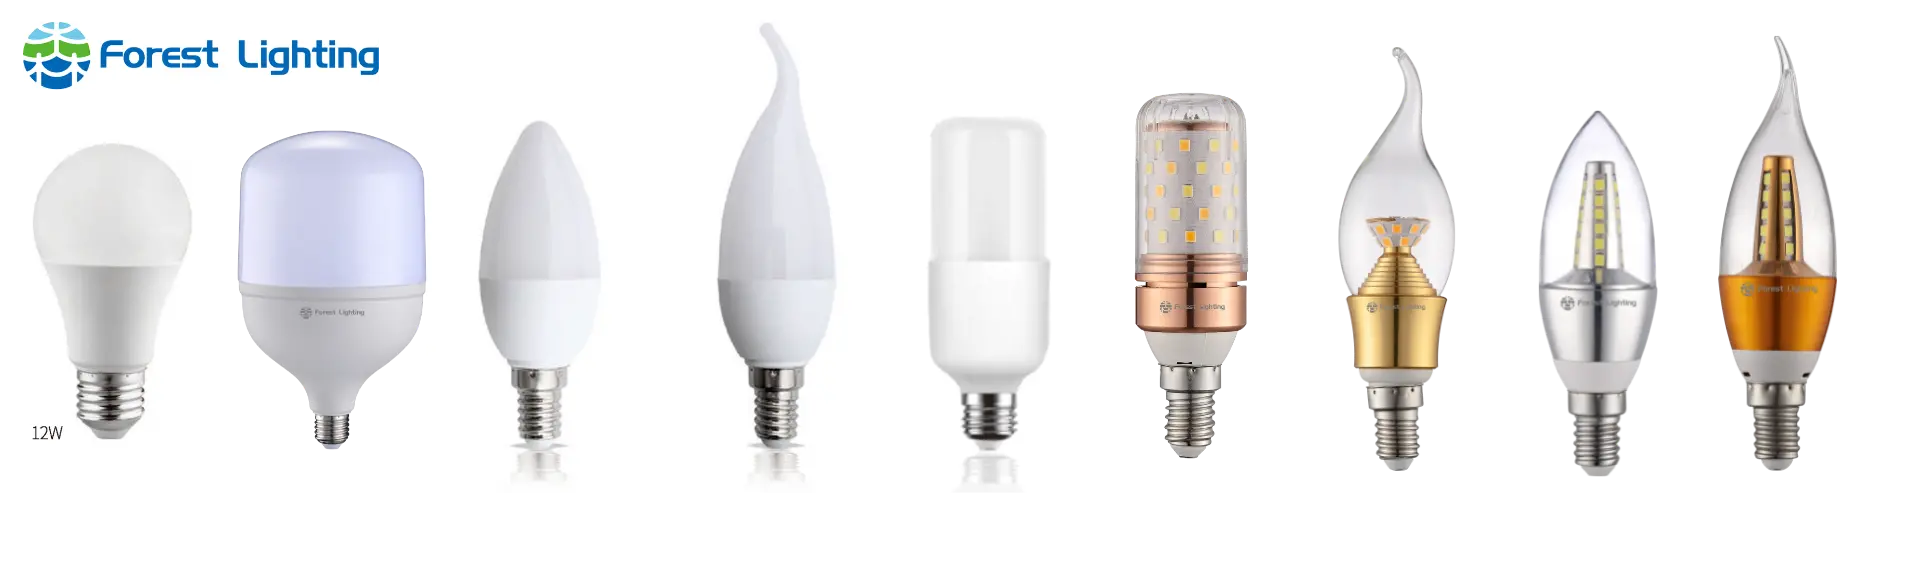 light bulb suppliers 